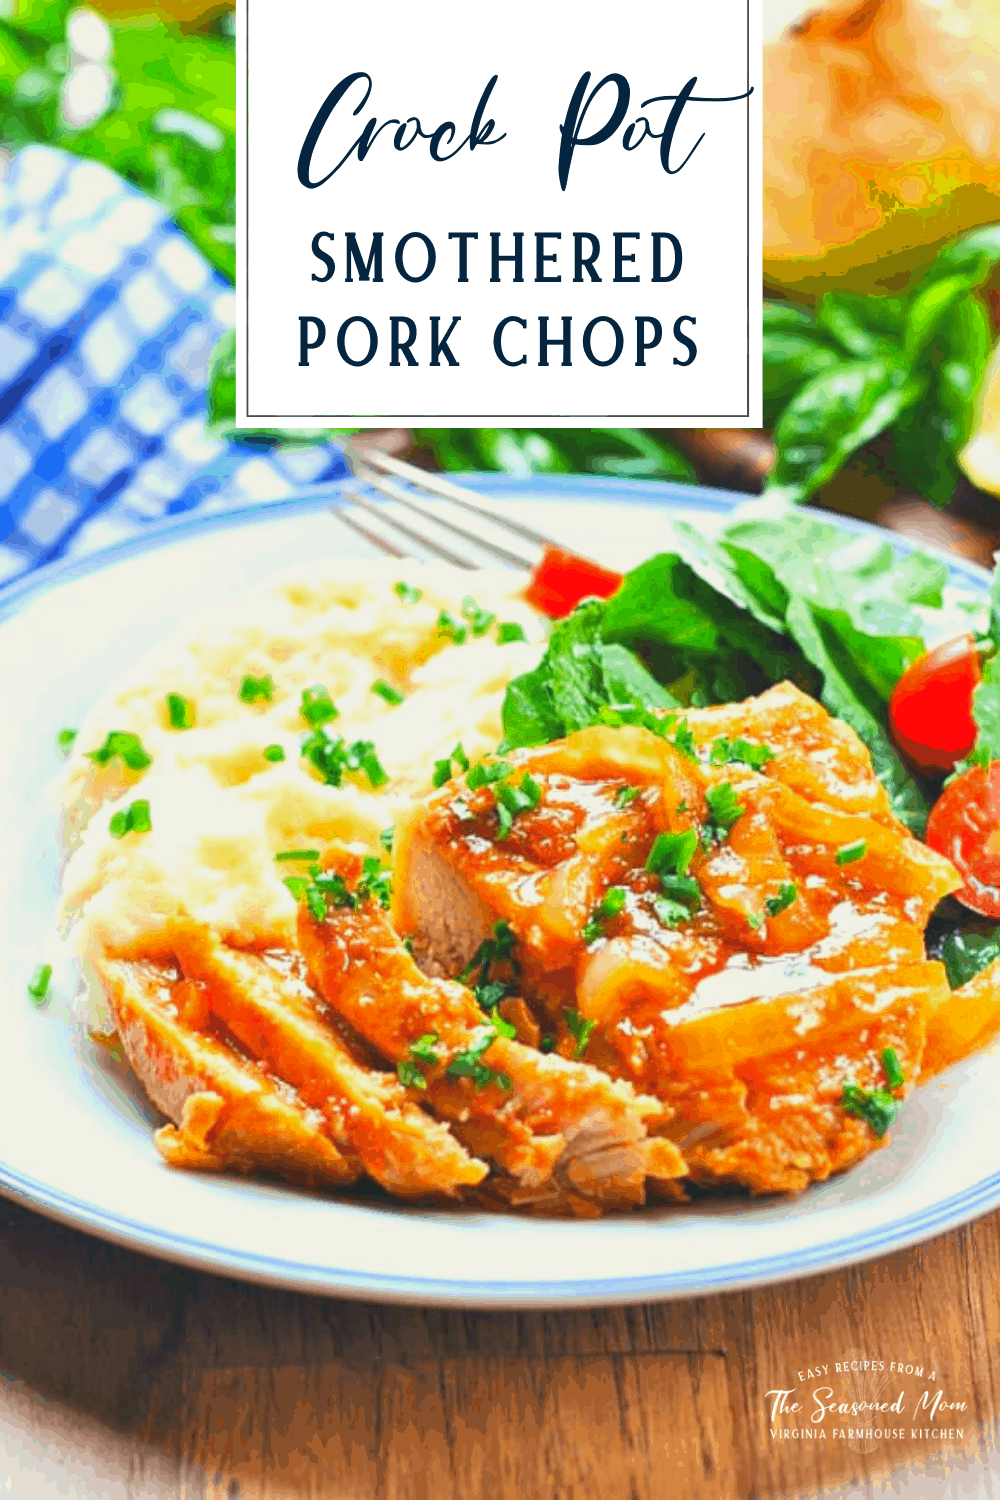 Crock Pot Smothered Pork Chops - The Seasoned Mom